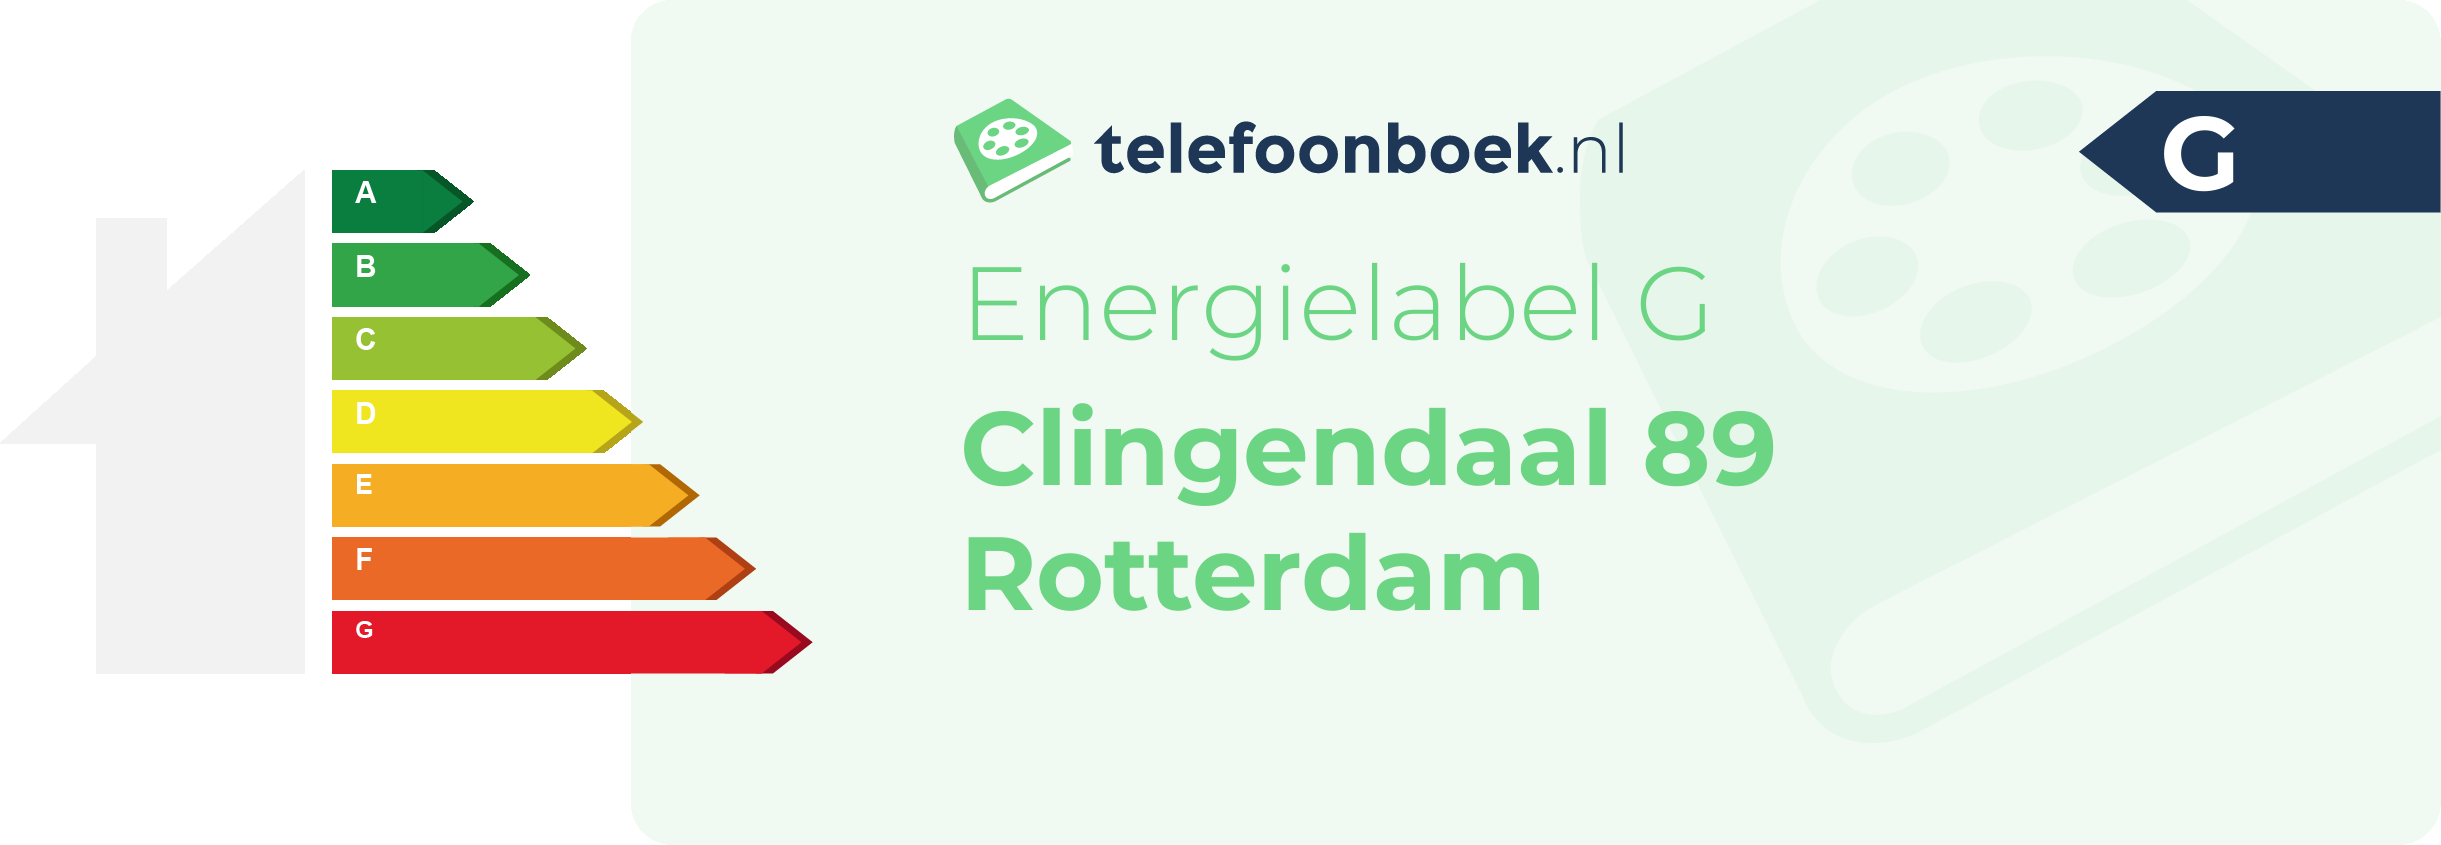 Energielabel Clingendaal 89 Rotterdam